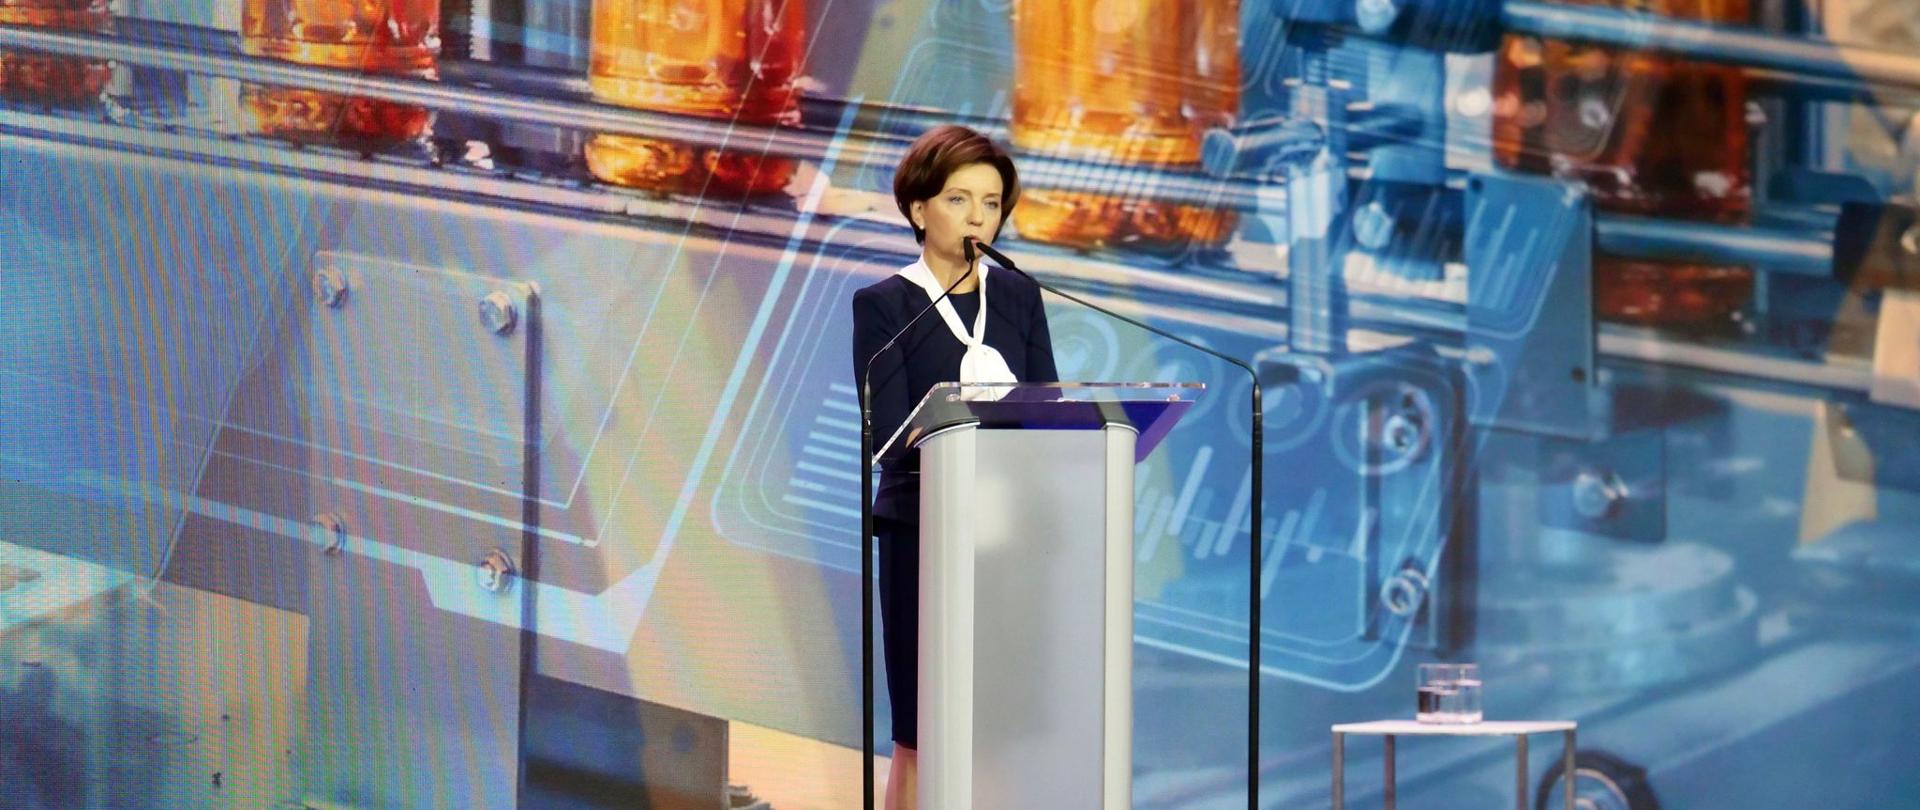 Minister Marlena Maląg